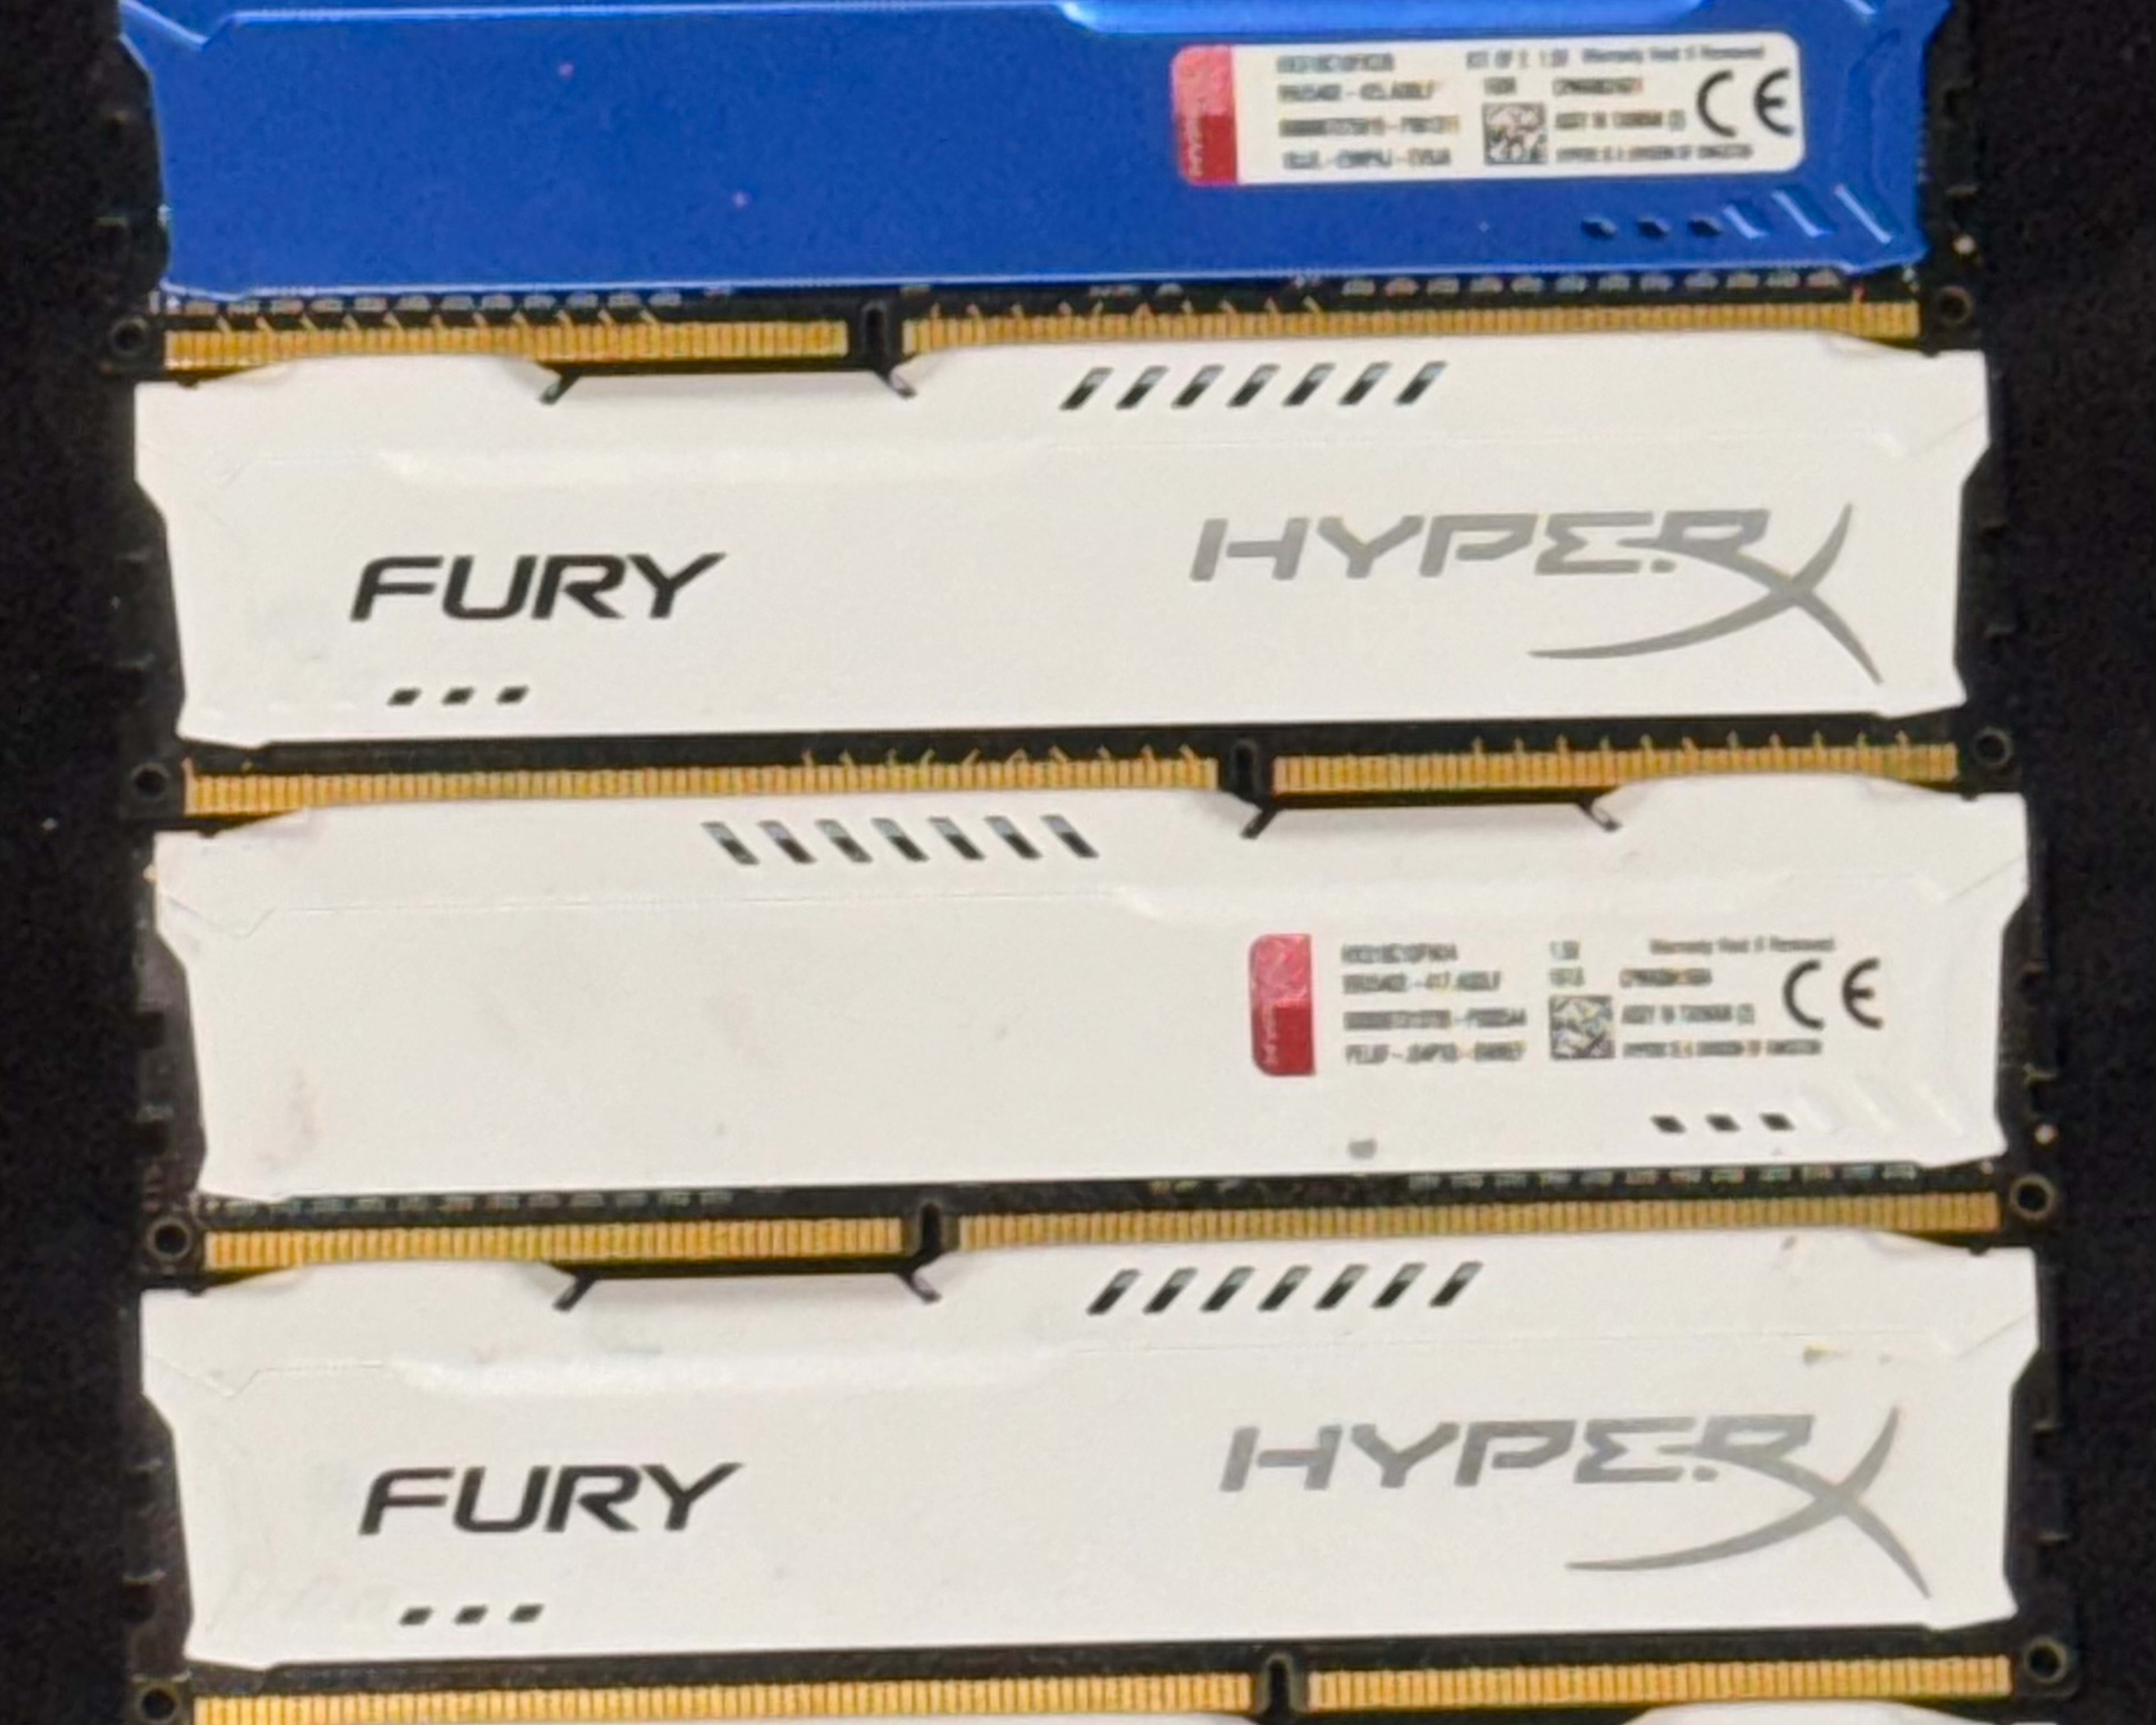 1 pair of Hyper x DDR3 2133mhz 2x4gb